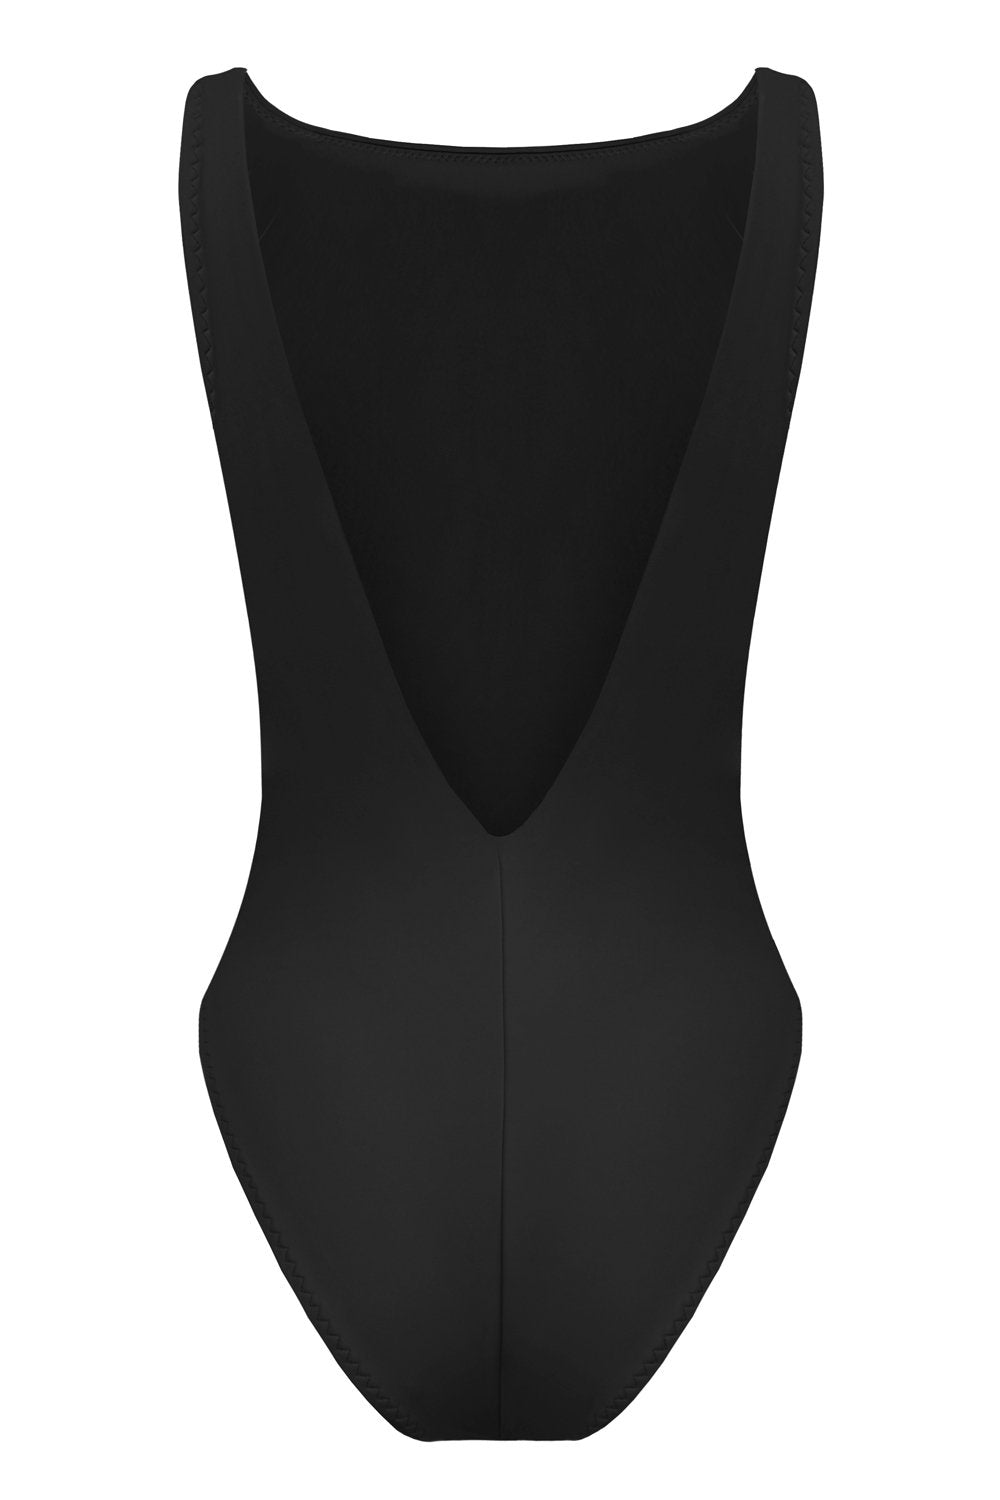 Vertex Black swimsuit